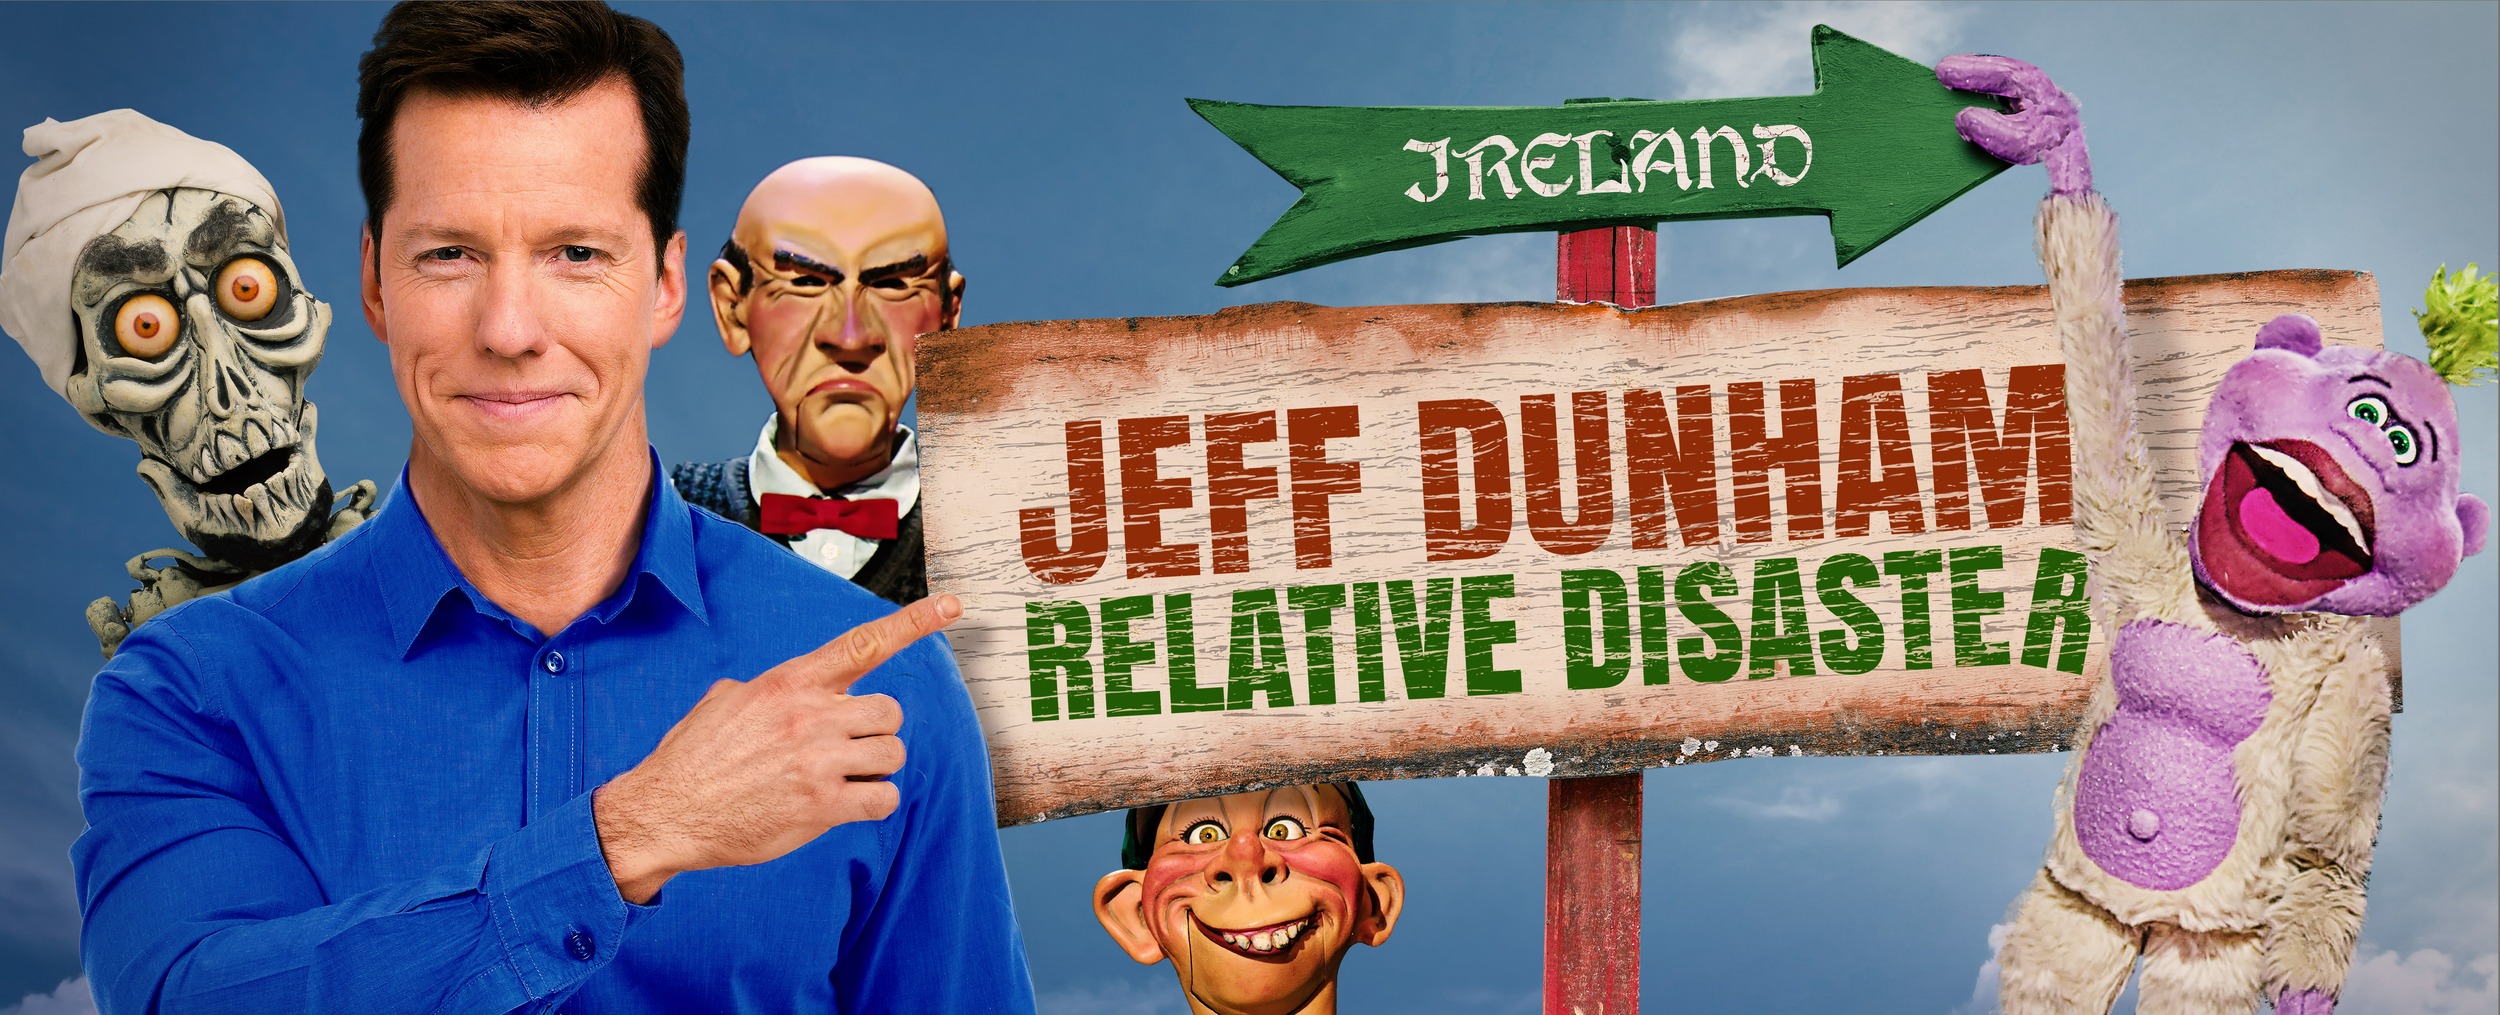 Mega Sized TV Poster Image for Jeff Dunham: Relative Disaster 